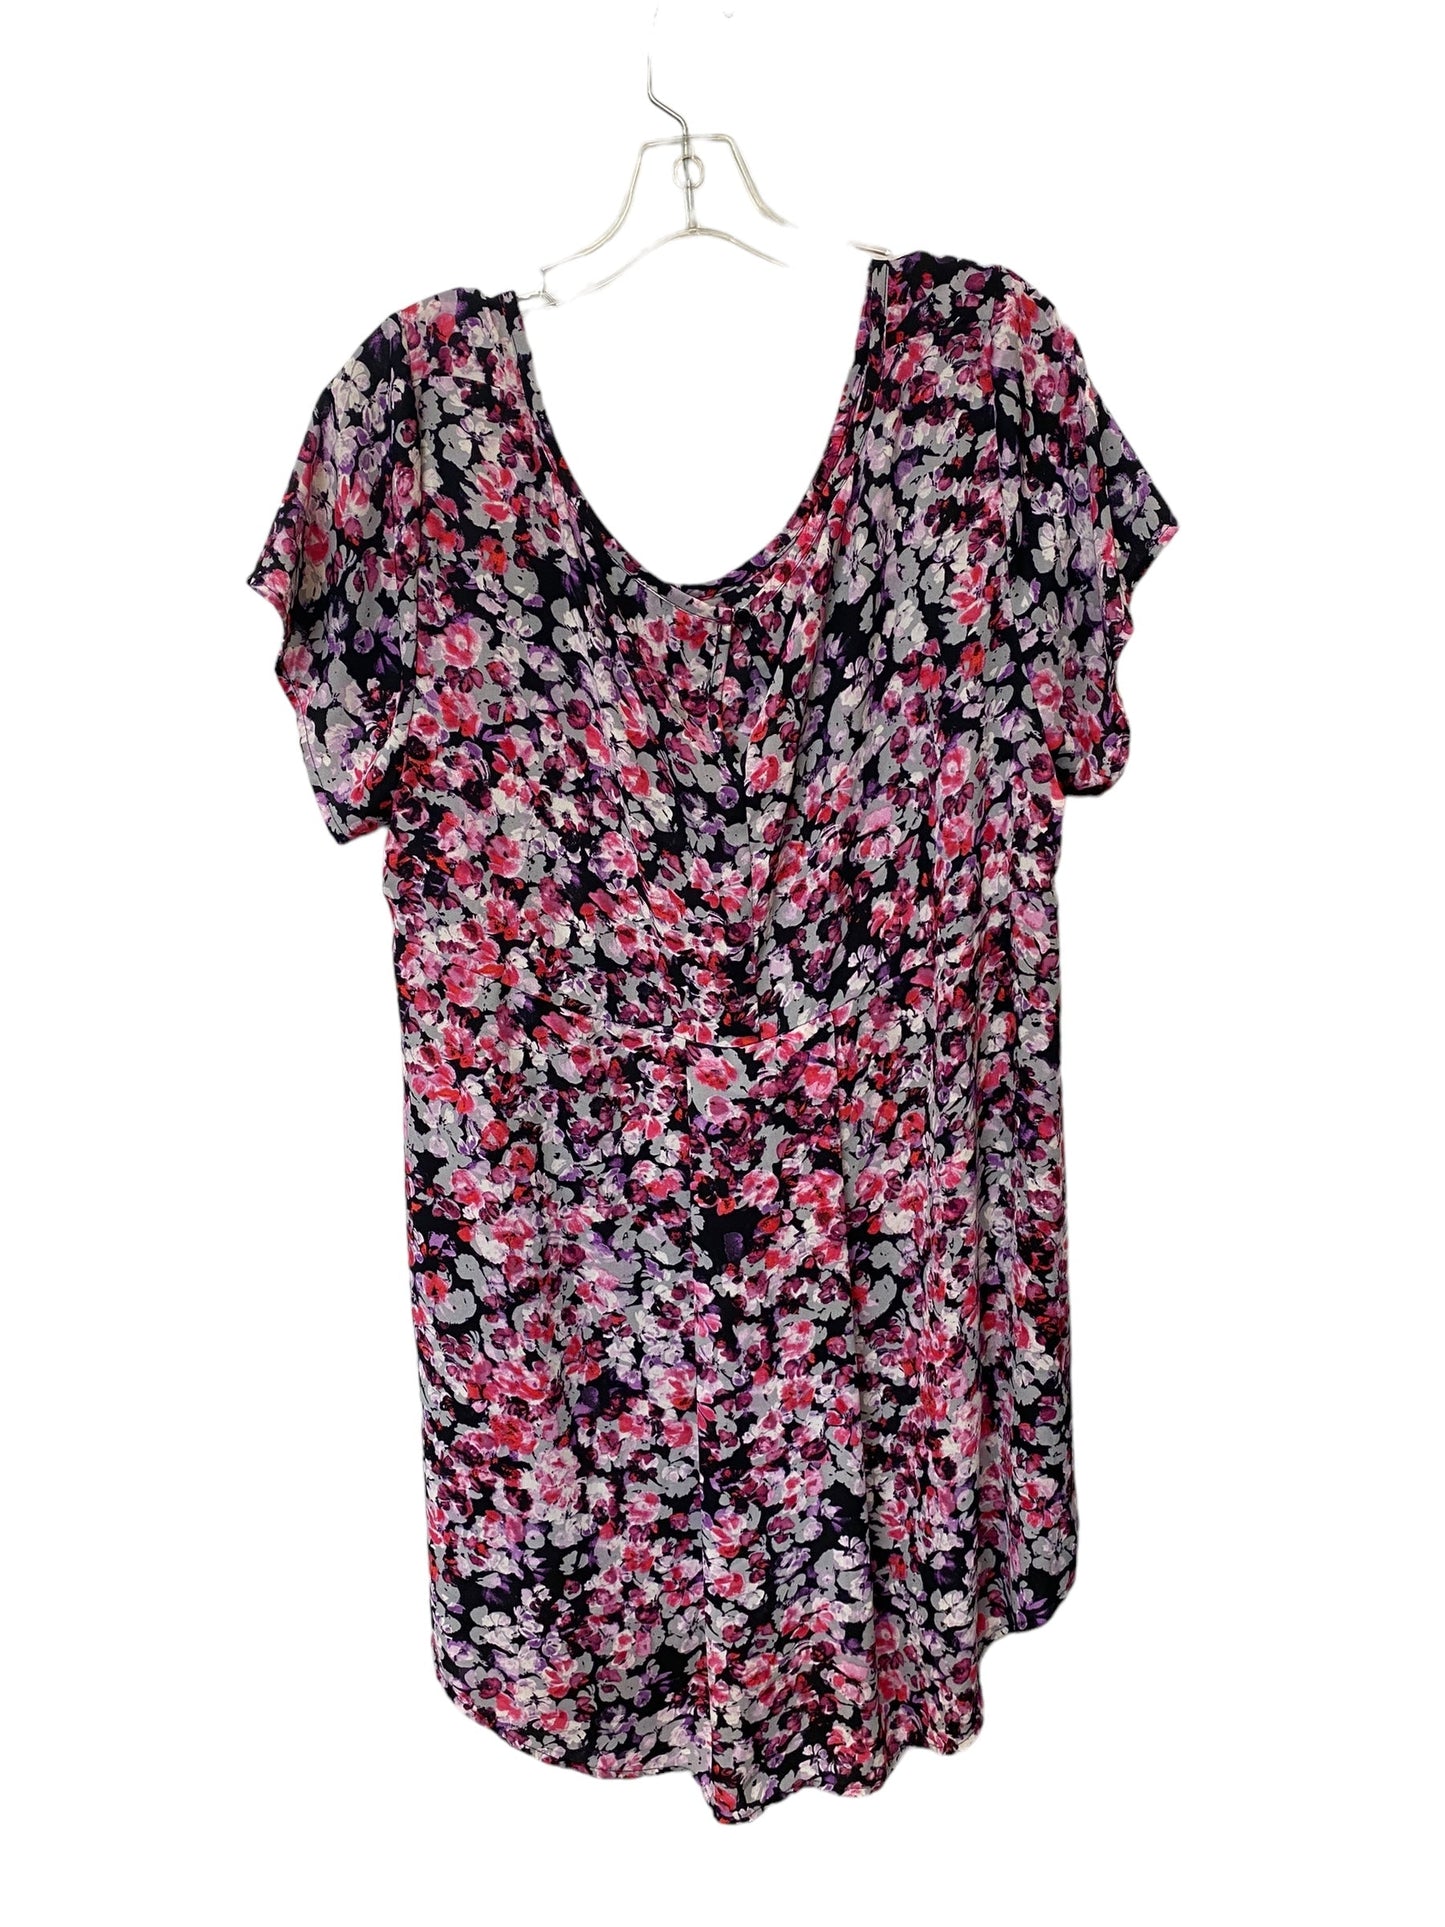 Floral Print Top Short Sleeve Boutique +, Size 1x